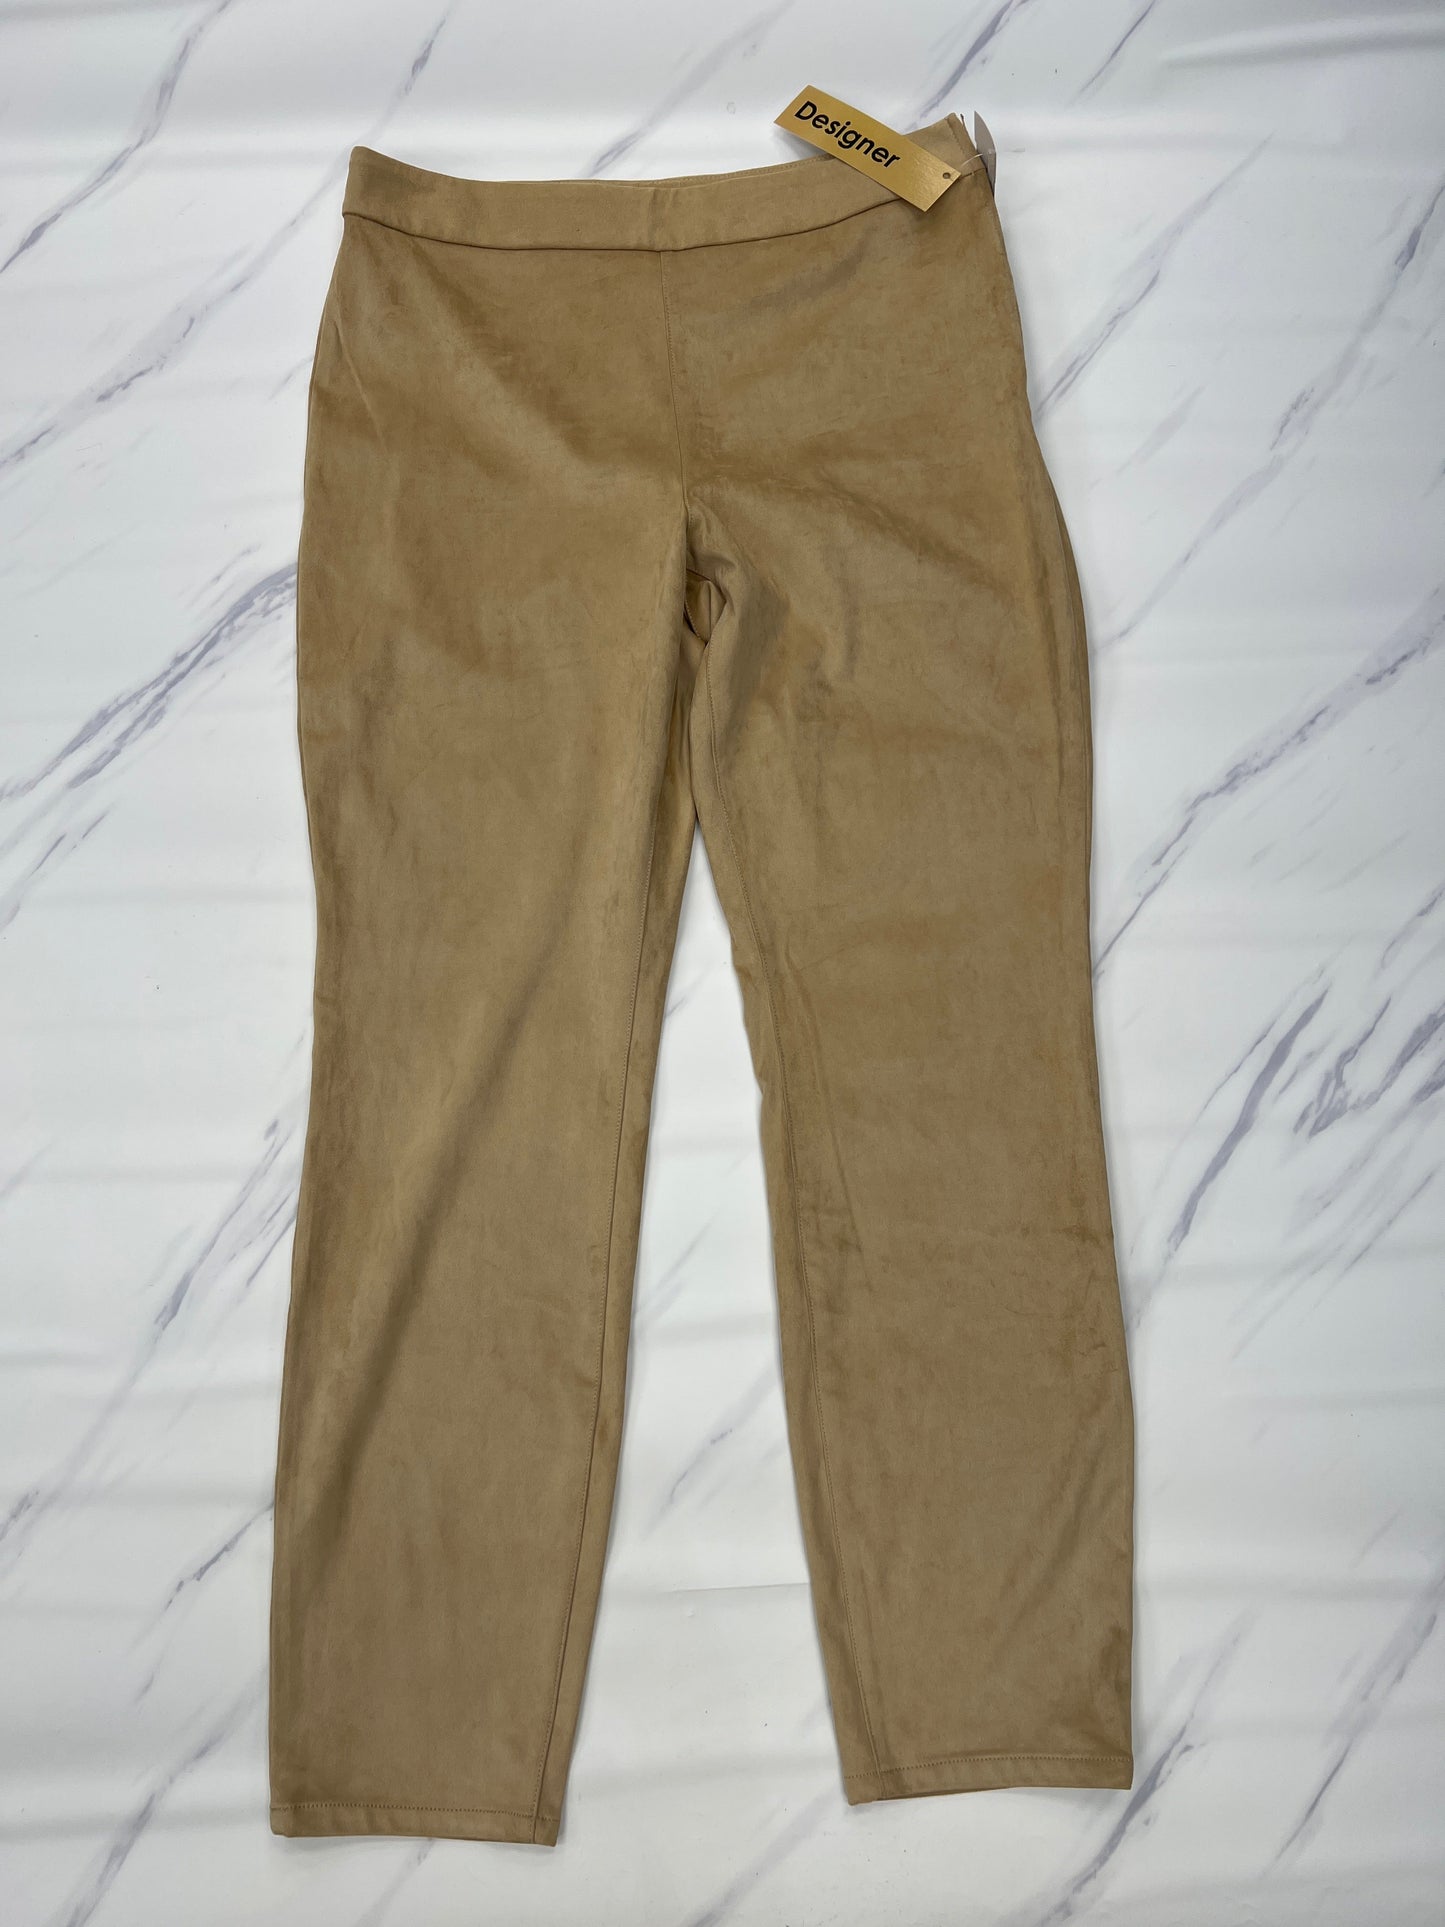 Tan Pants Designer Tommy Bahama, Size 6